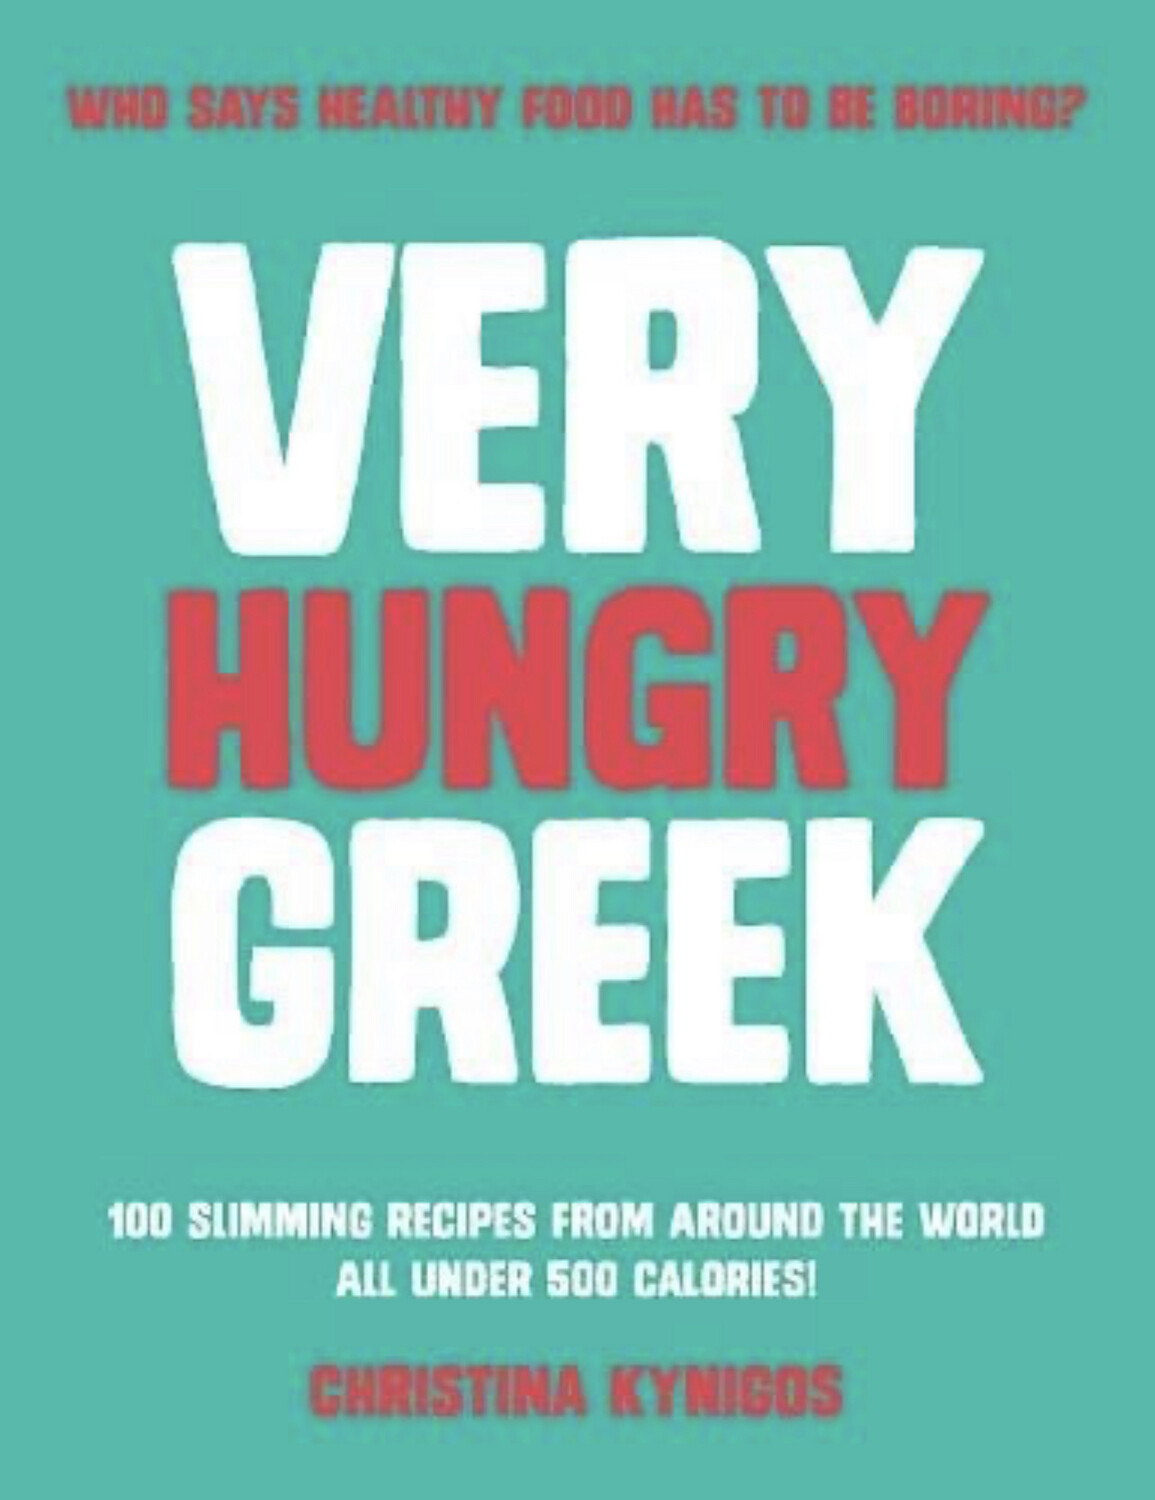 Very Hungry Greek